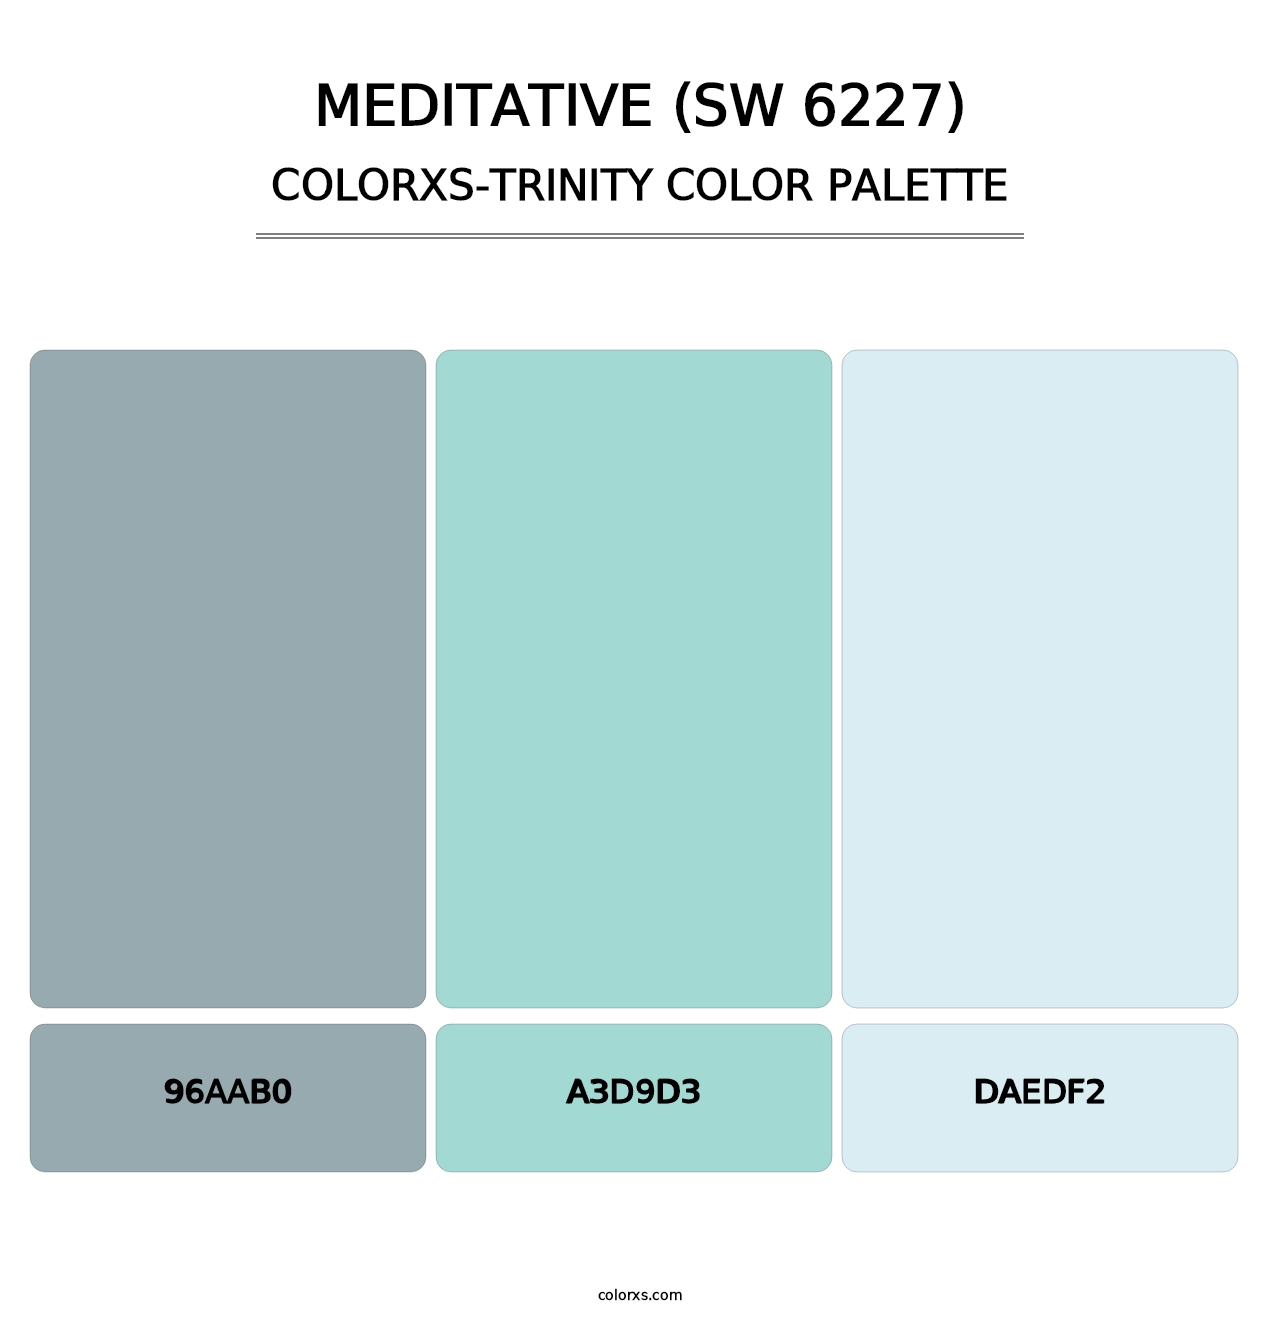 Meditative (SW 6227) - Colorxs Trinity Palette